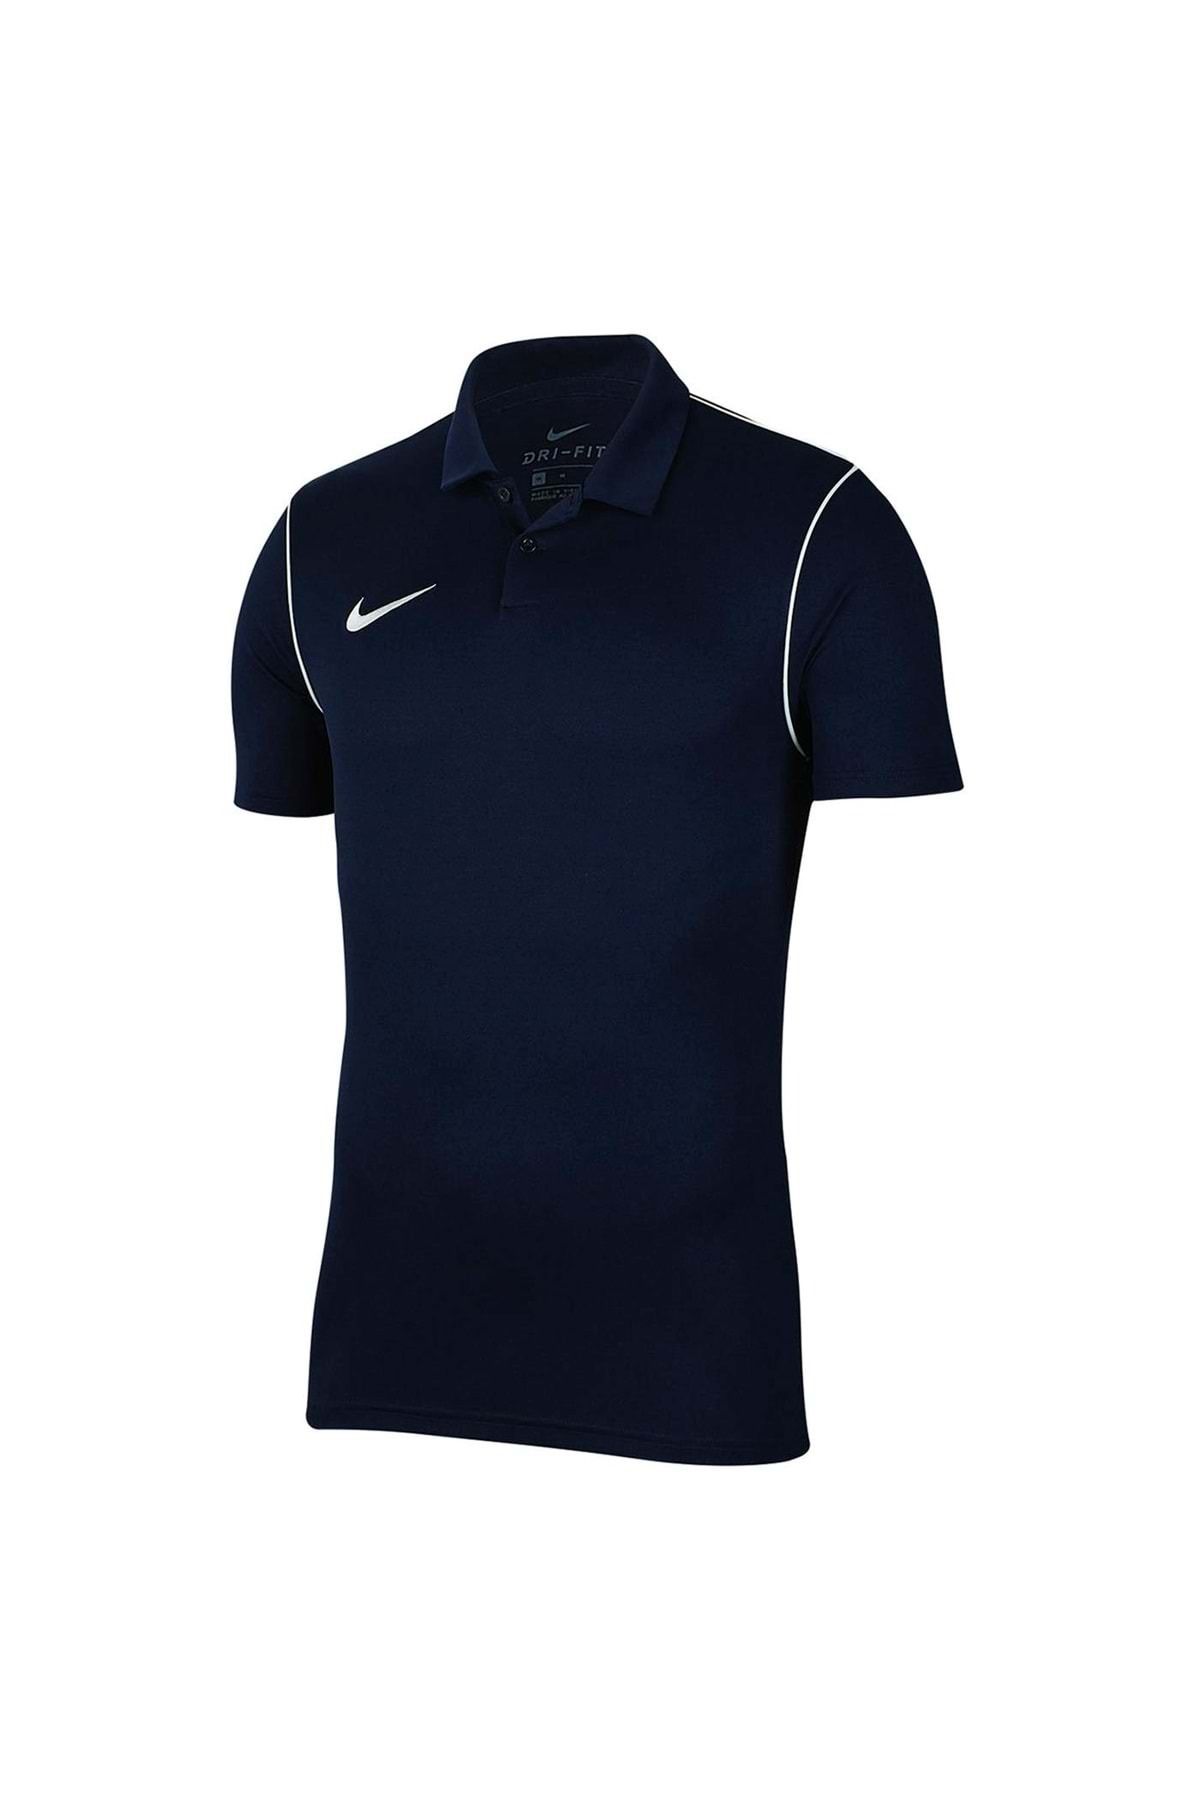 Nike Bv6879-410 Dri-fit Park Polo Tişört Erkek Futbol Forması